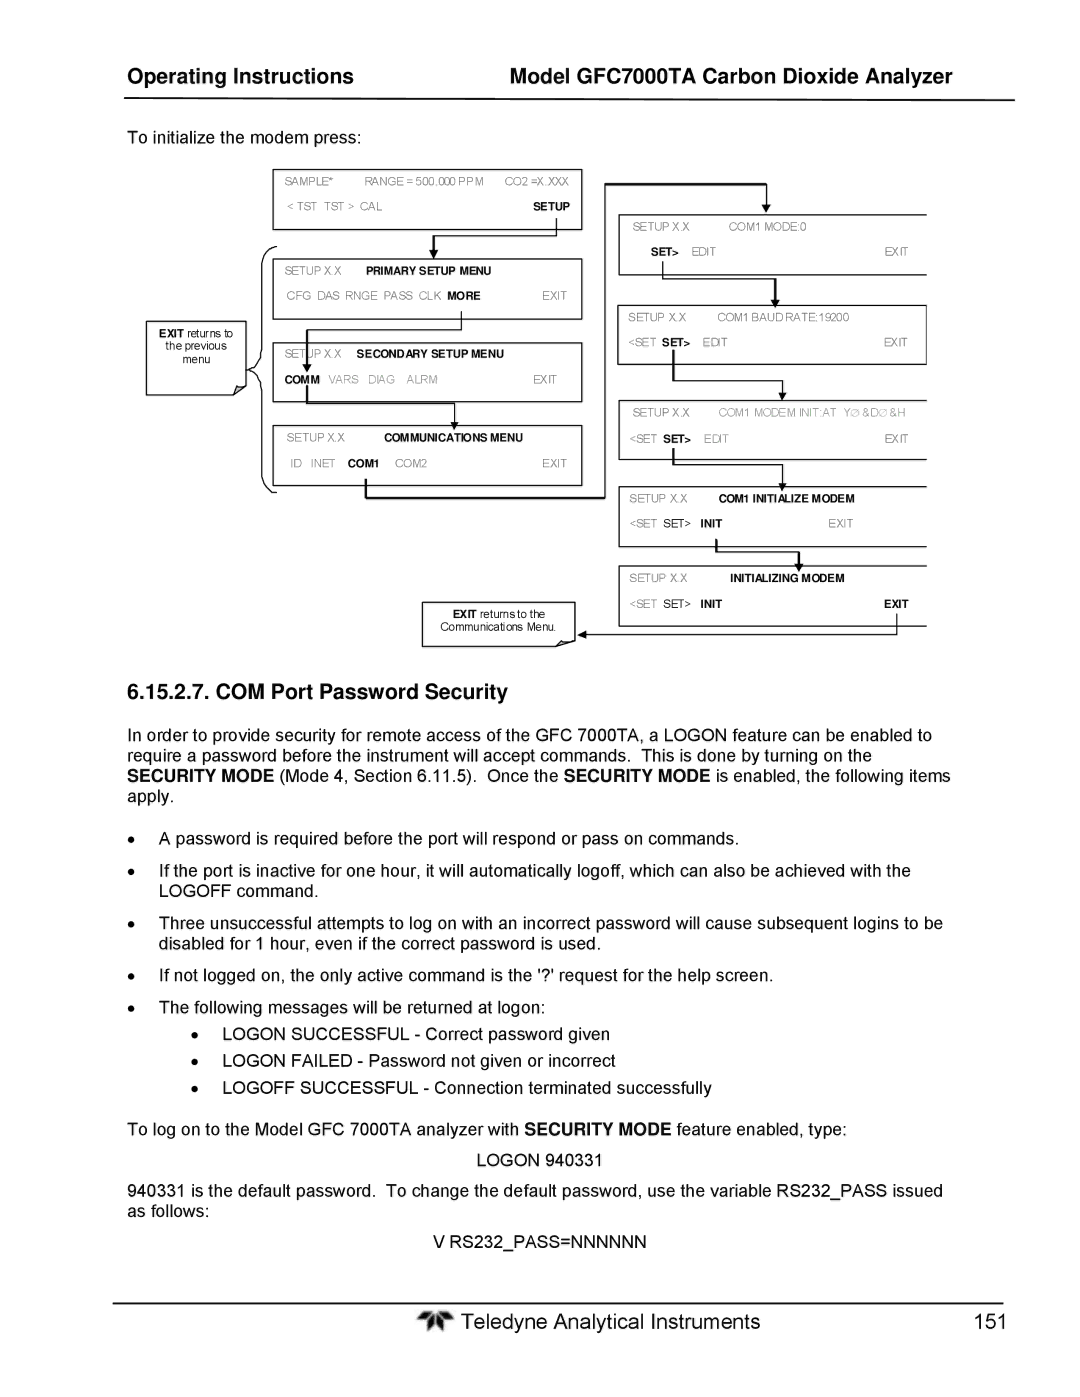 Teledyne gfc 7000ta operation manual COM Port Password Security, To initialize the modem press 